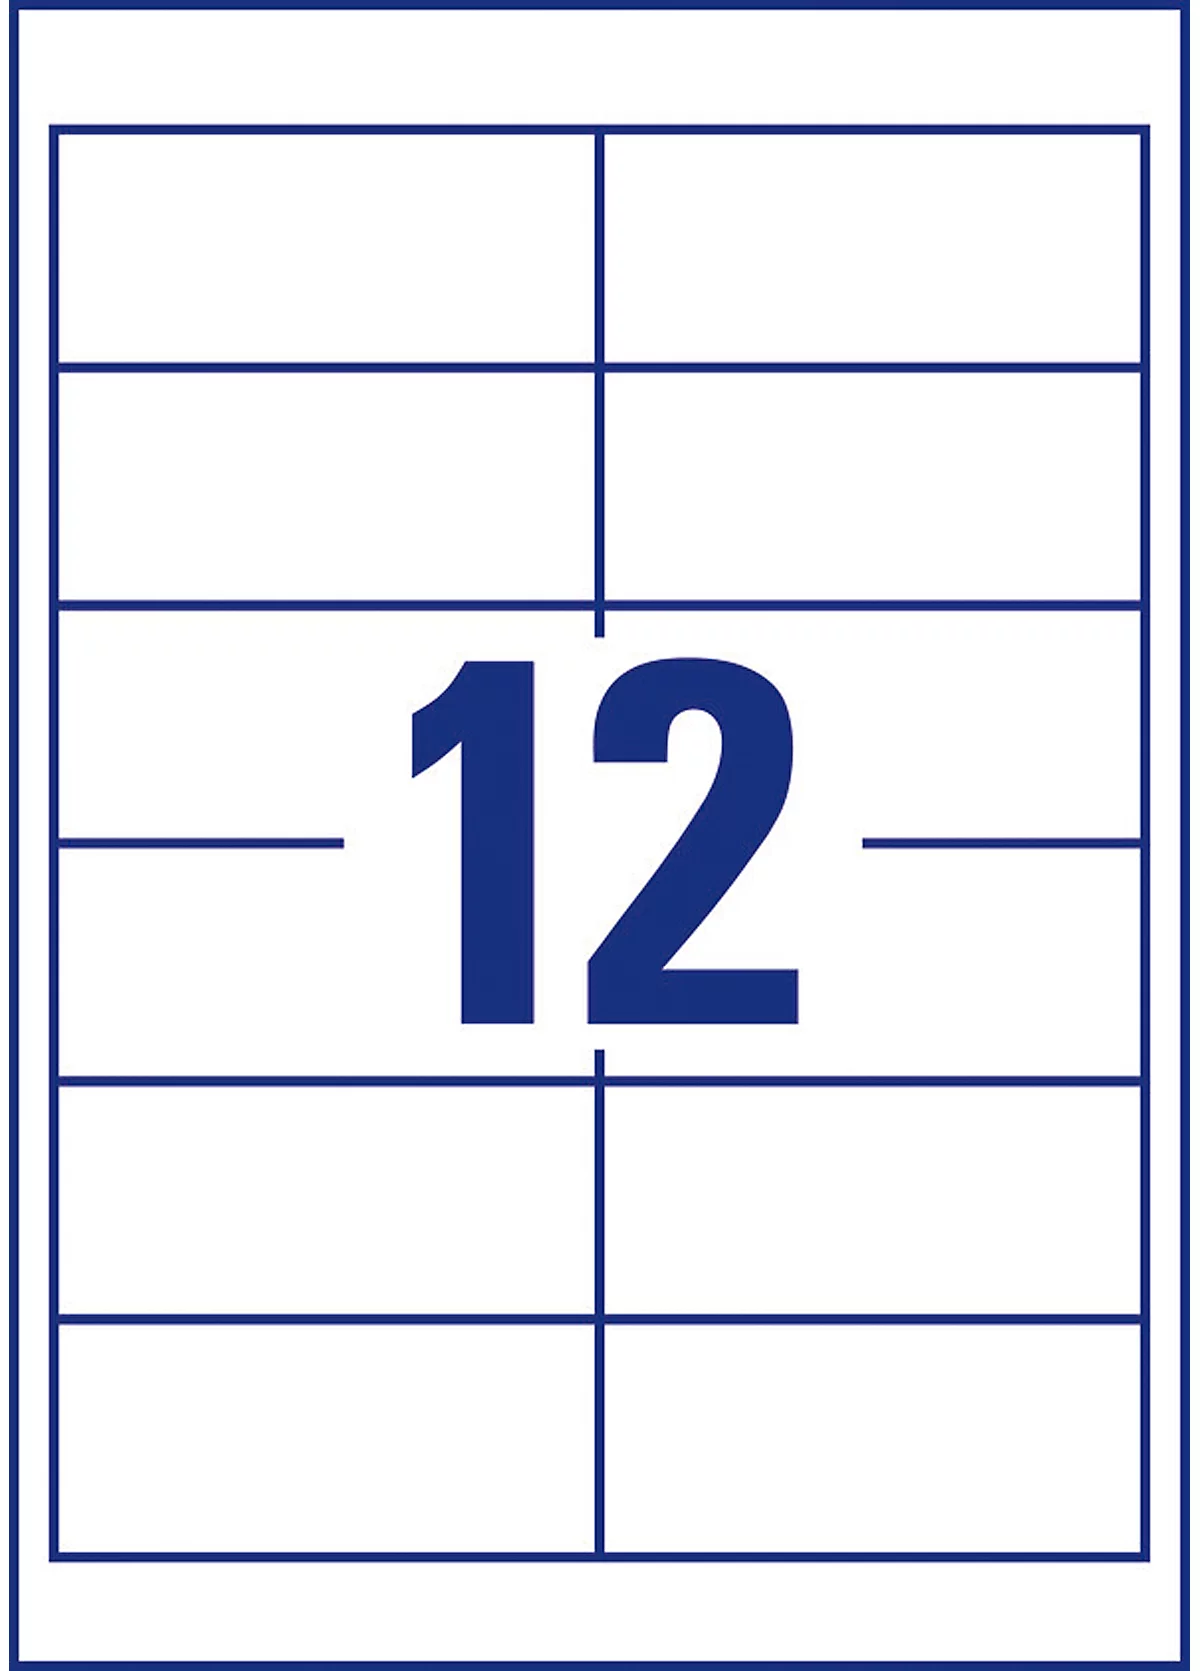 AVERY Zweckform Universele etiketten, 97 x 42,3 mm, nr. 3659-200, 12 per blad, doos van 200 blad, 2400 etiketten